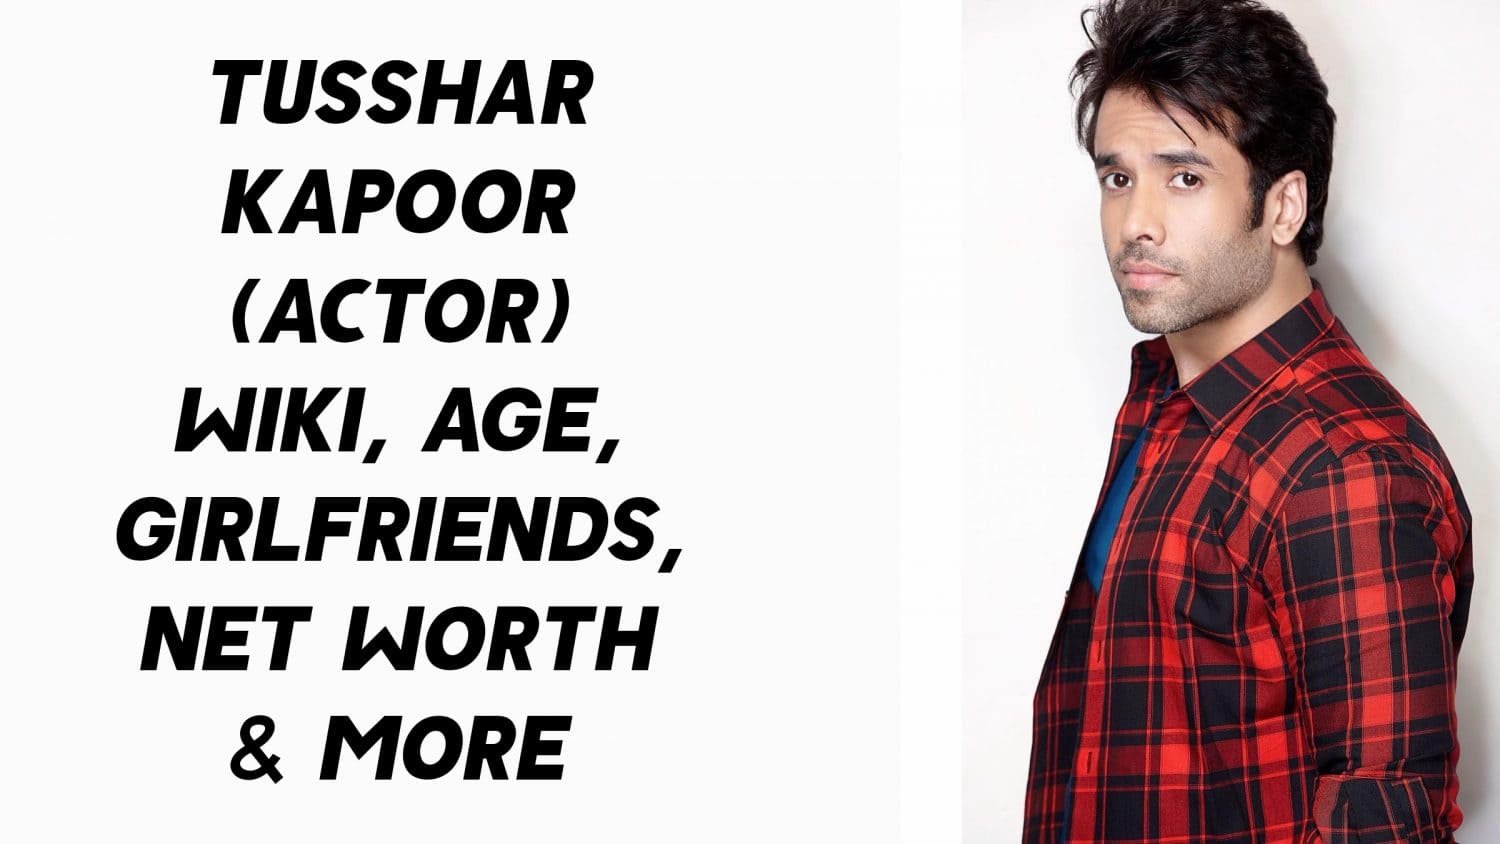 Tusshar Kapoor (Actor) Wiki, Age, Girlfriends, Net Worth & More 1